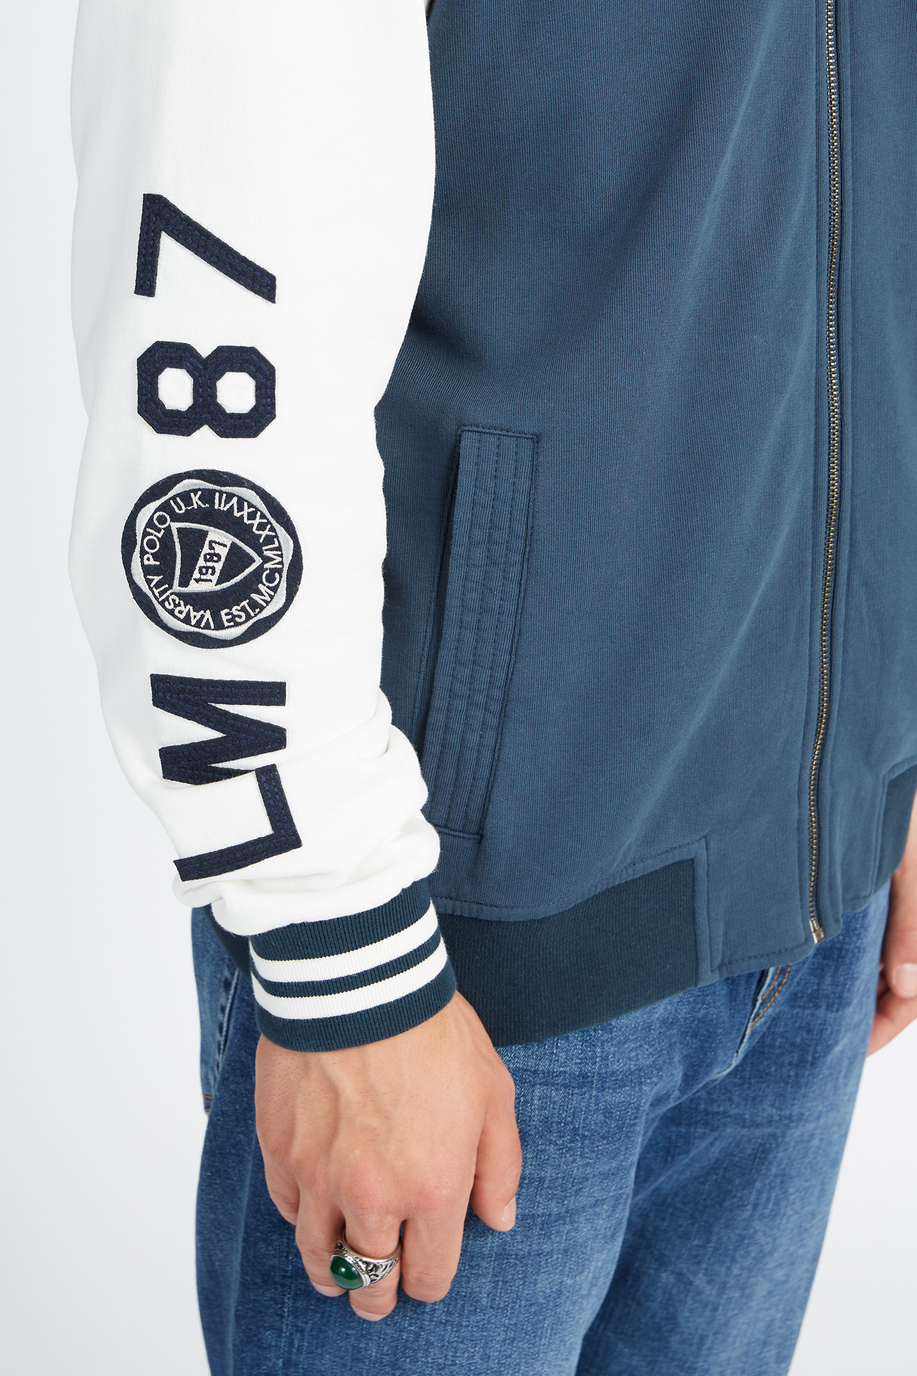 Polo Academy men's full-zip crewneck sweatshirt in color block with large logo - Vandan - Knitwear & Sweatshirts | La Martina - Official Online Shop